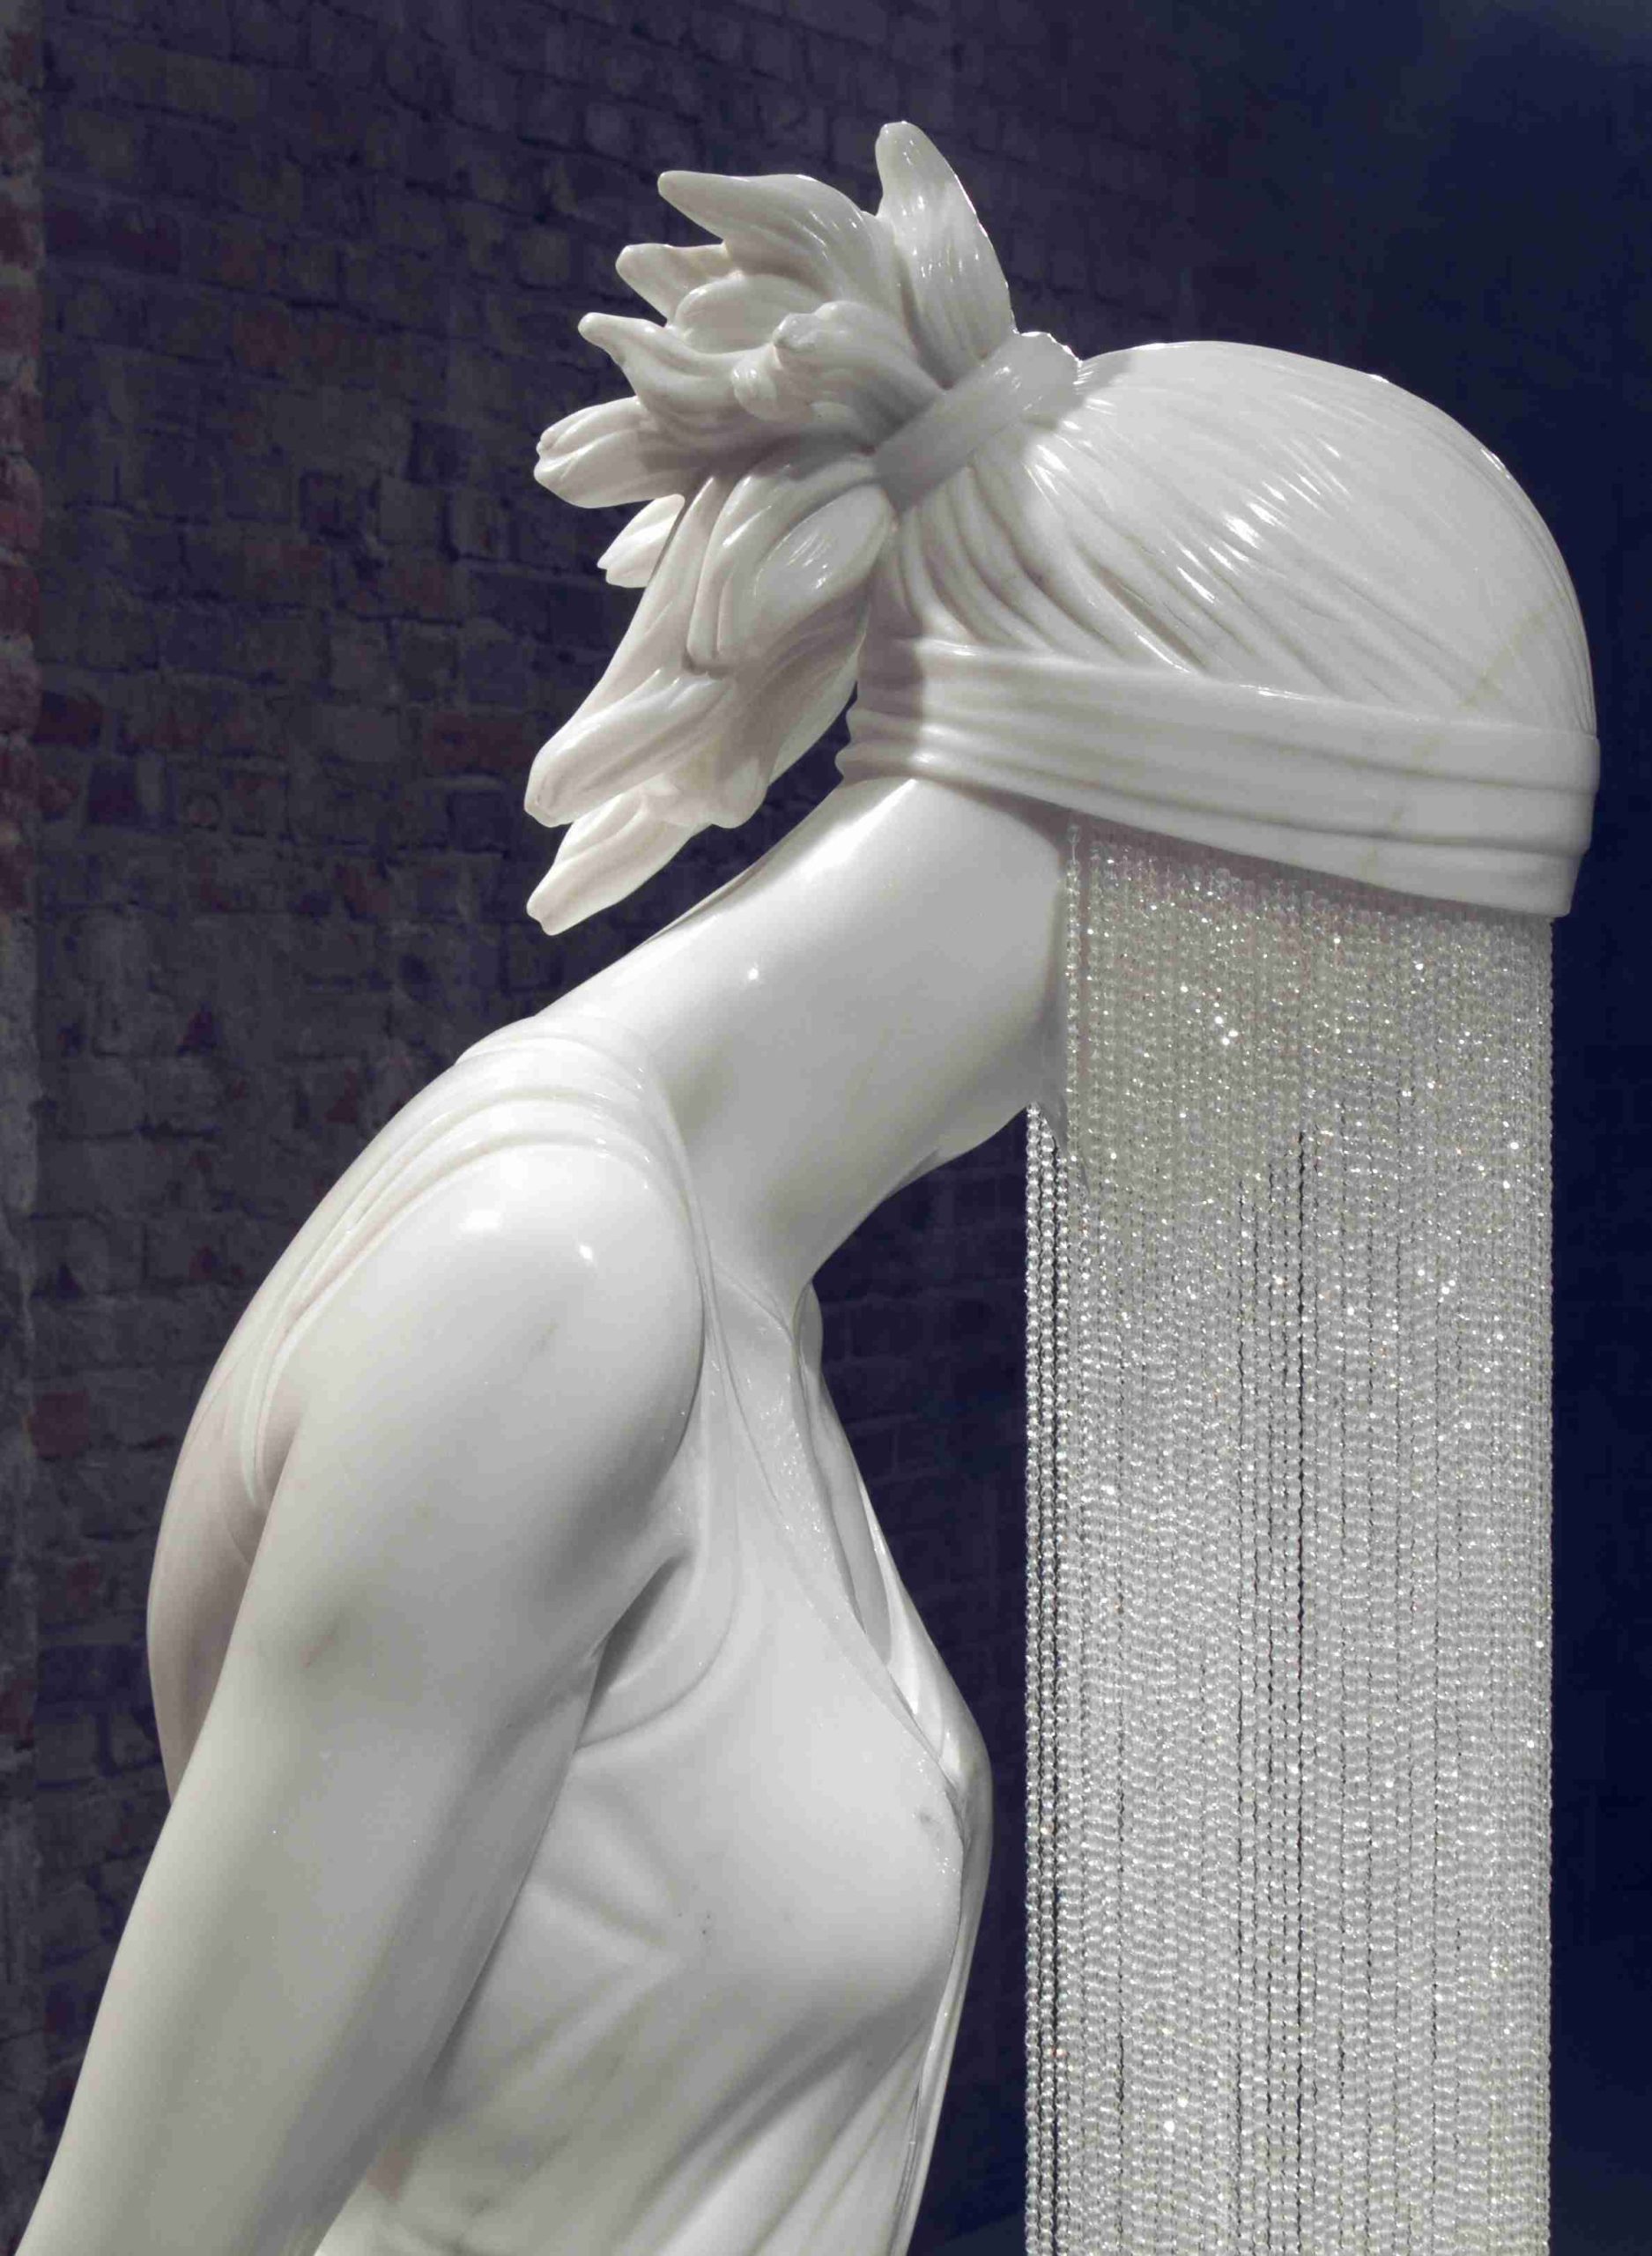 Ghost Girl sculpture (2)